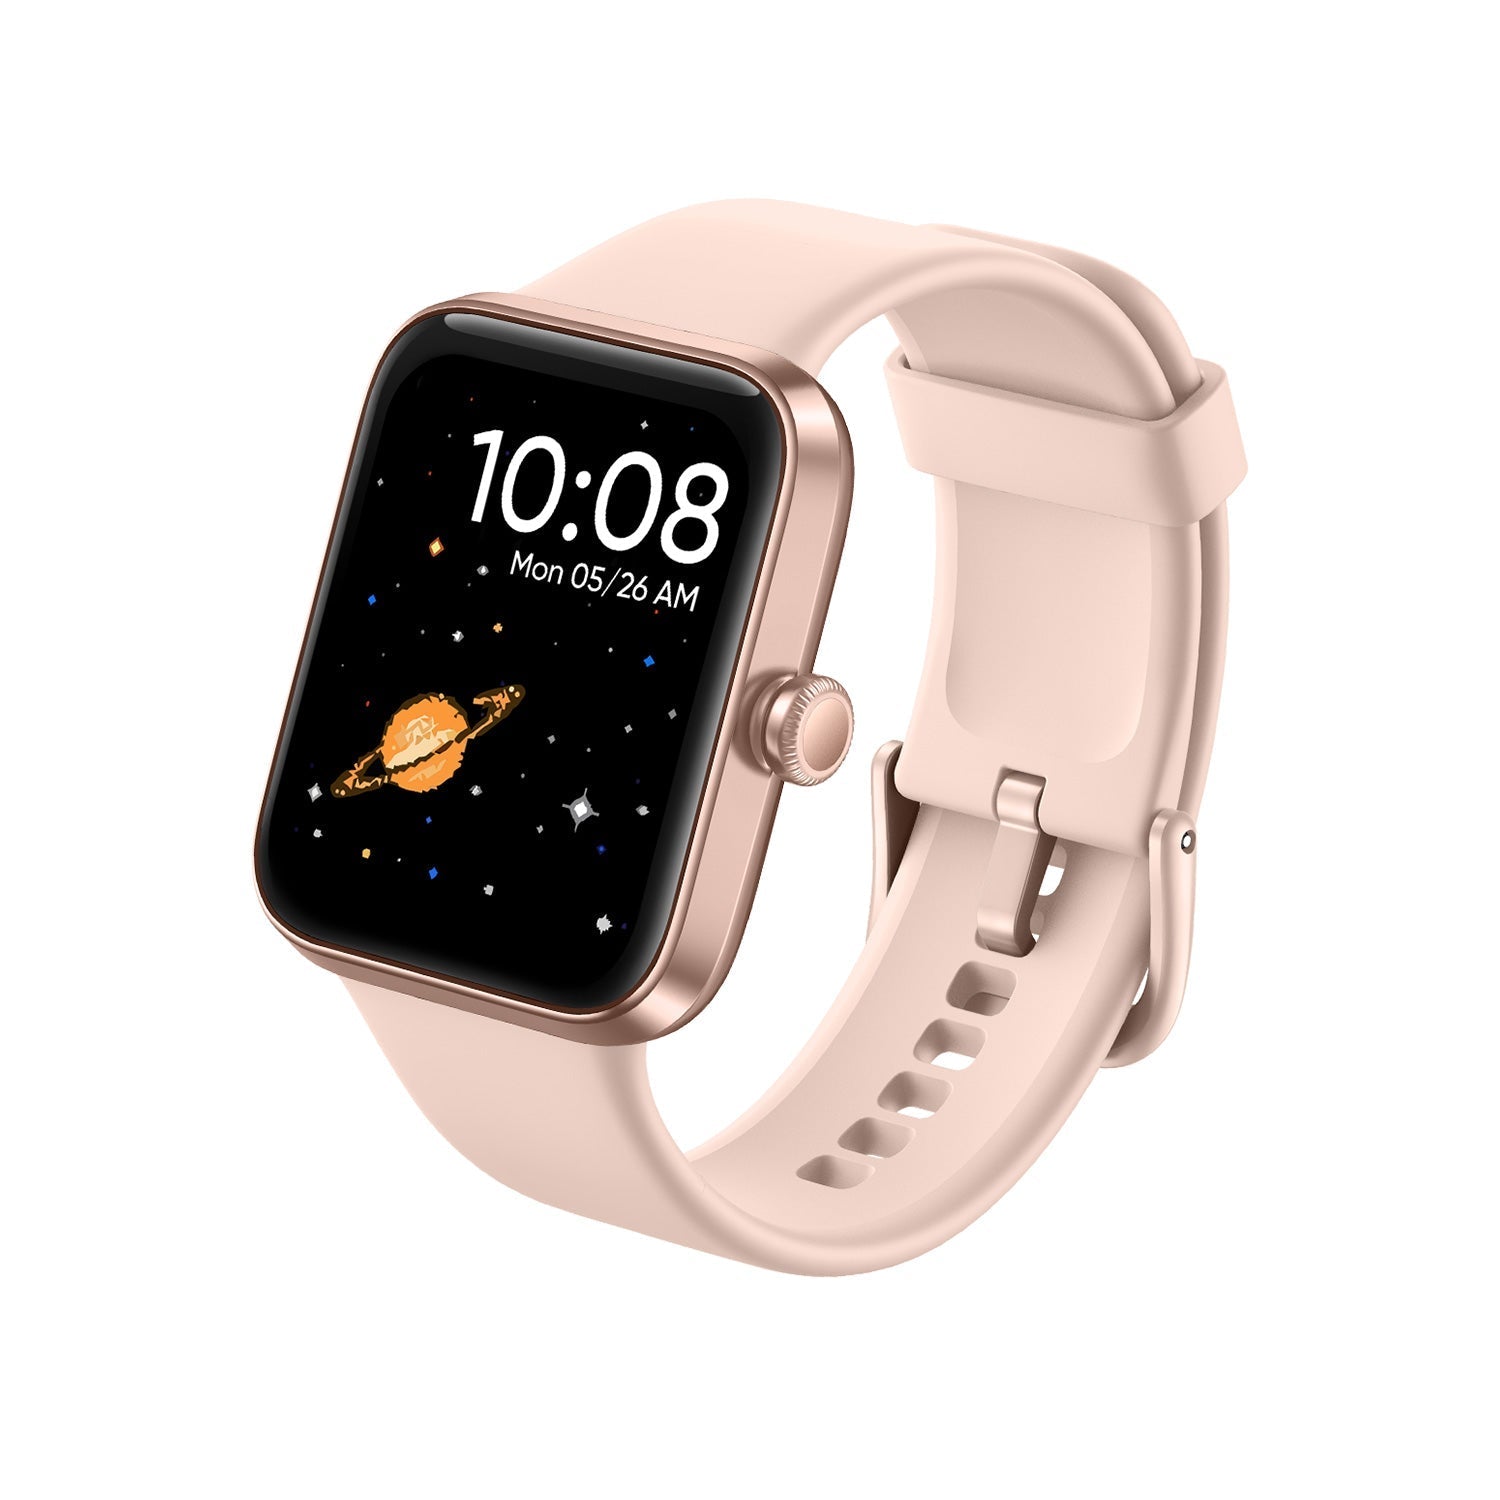 Fitpolo Smartwatch 207 Mini (Use code: 207mini to get $16 off)